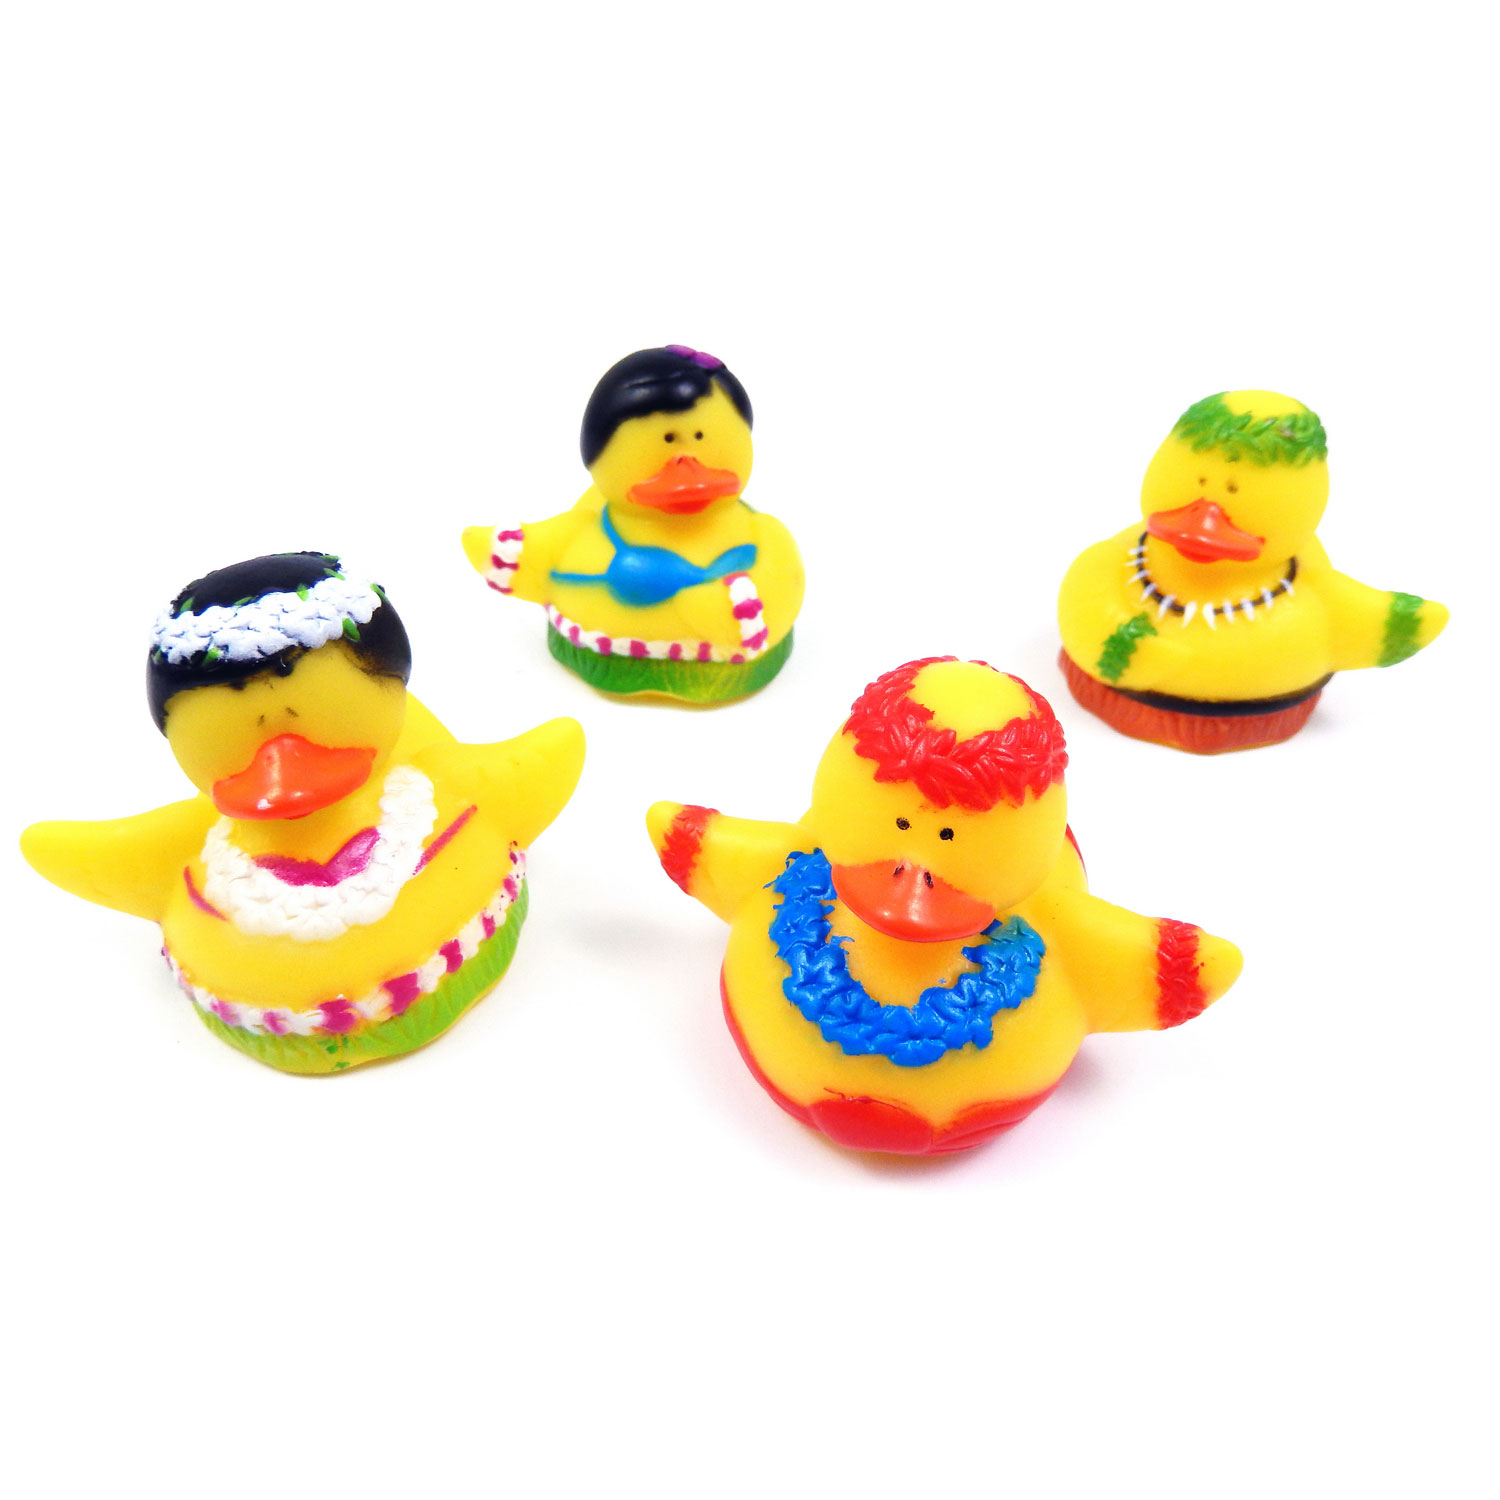 4 inch rubber ducks